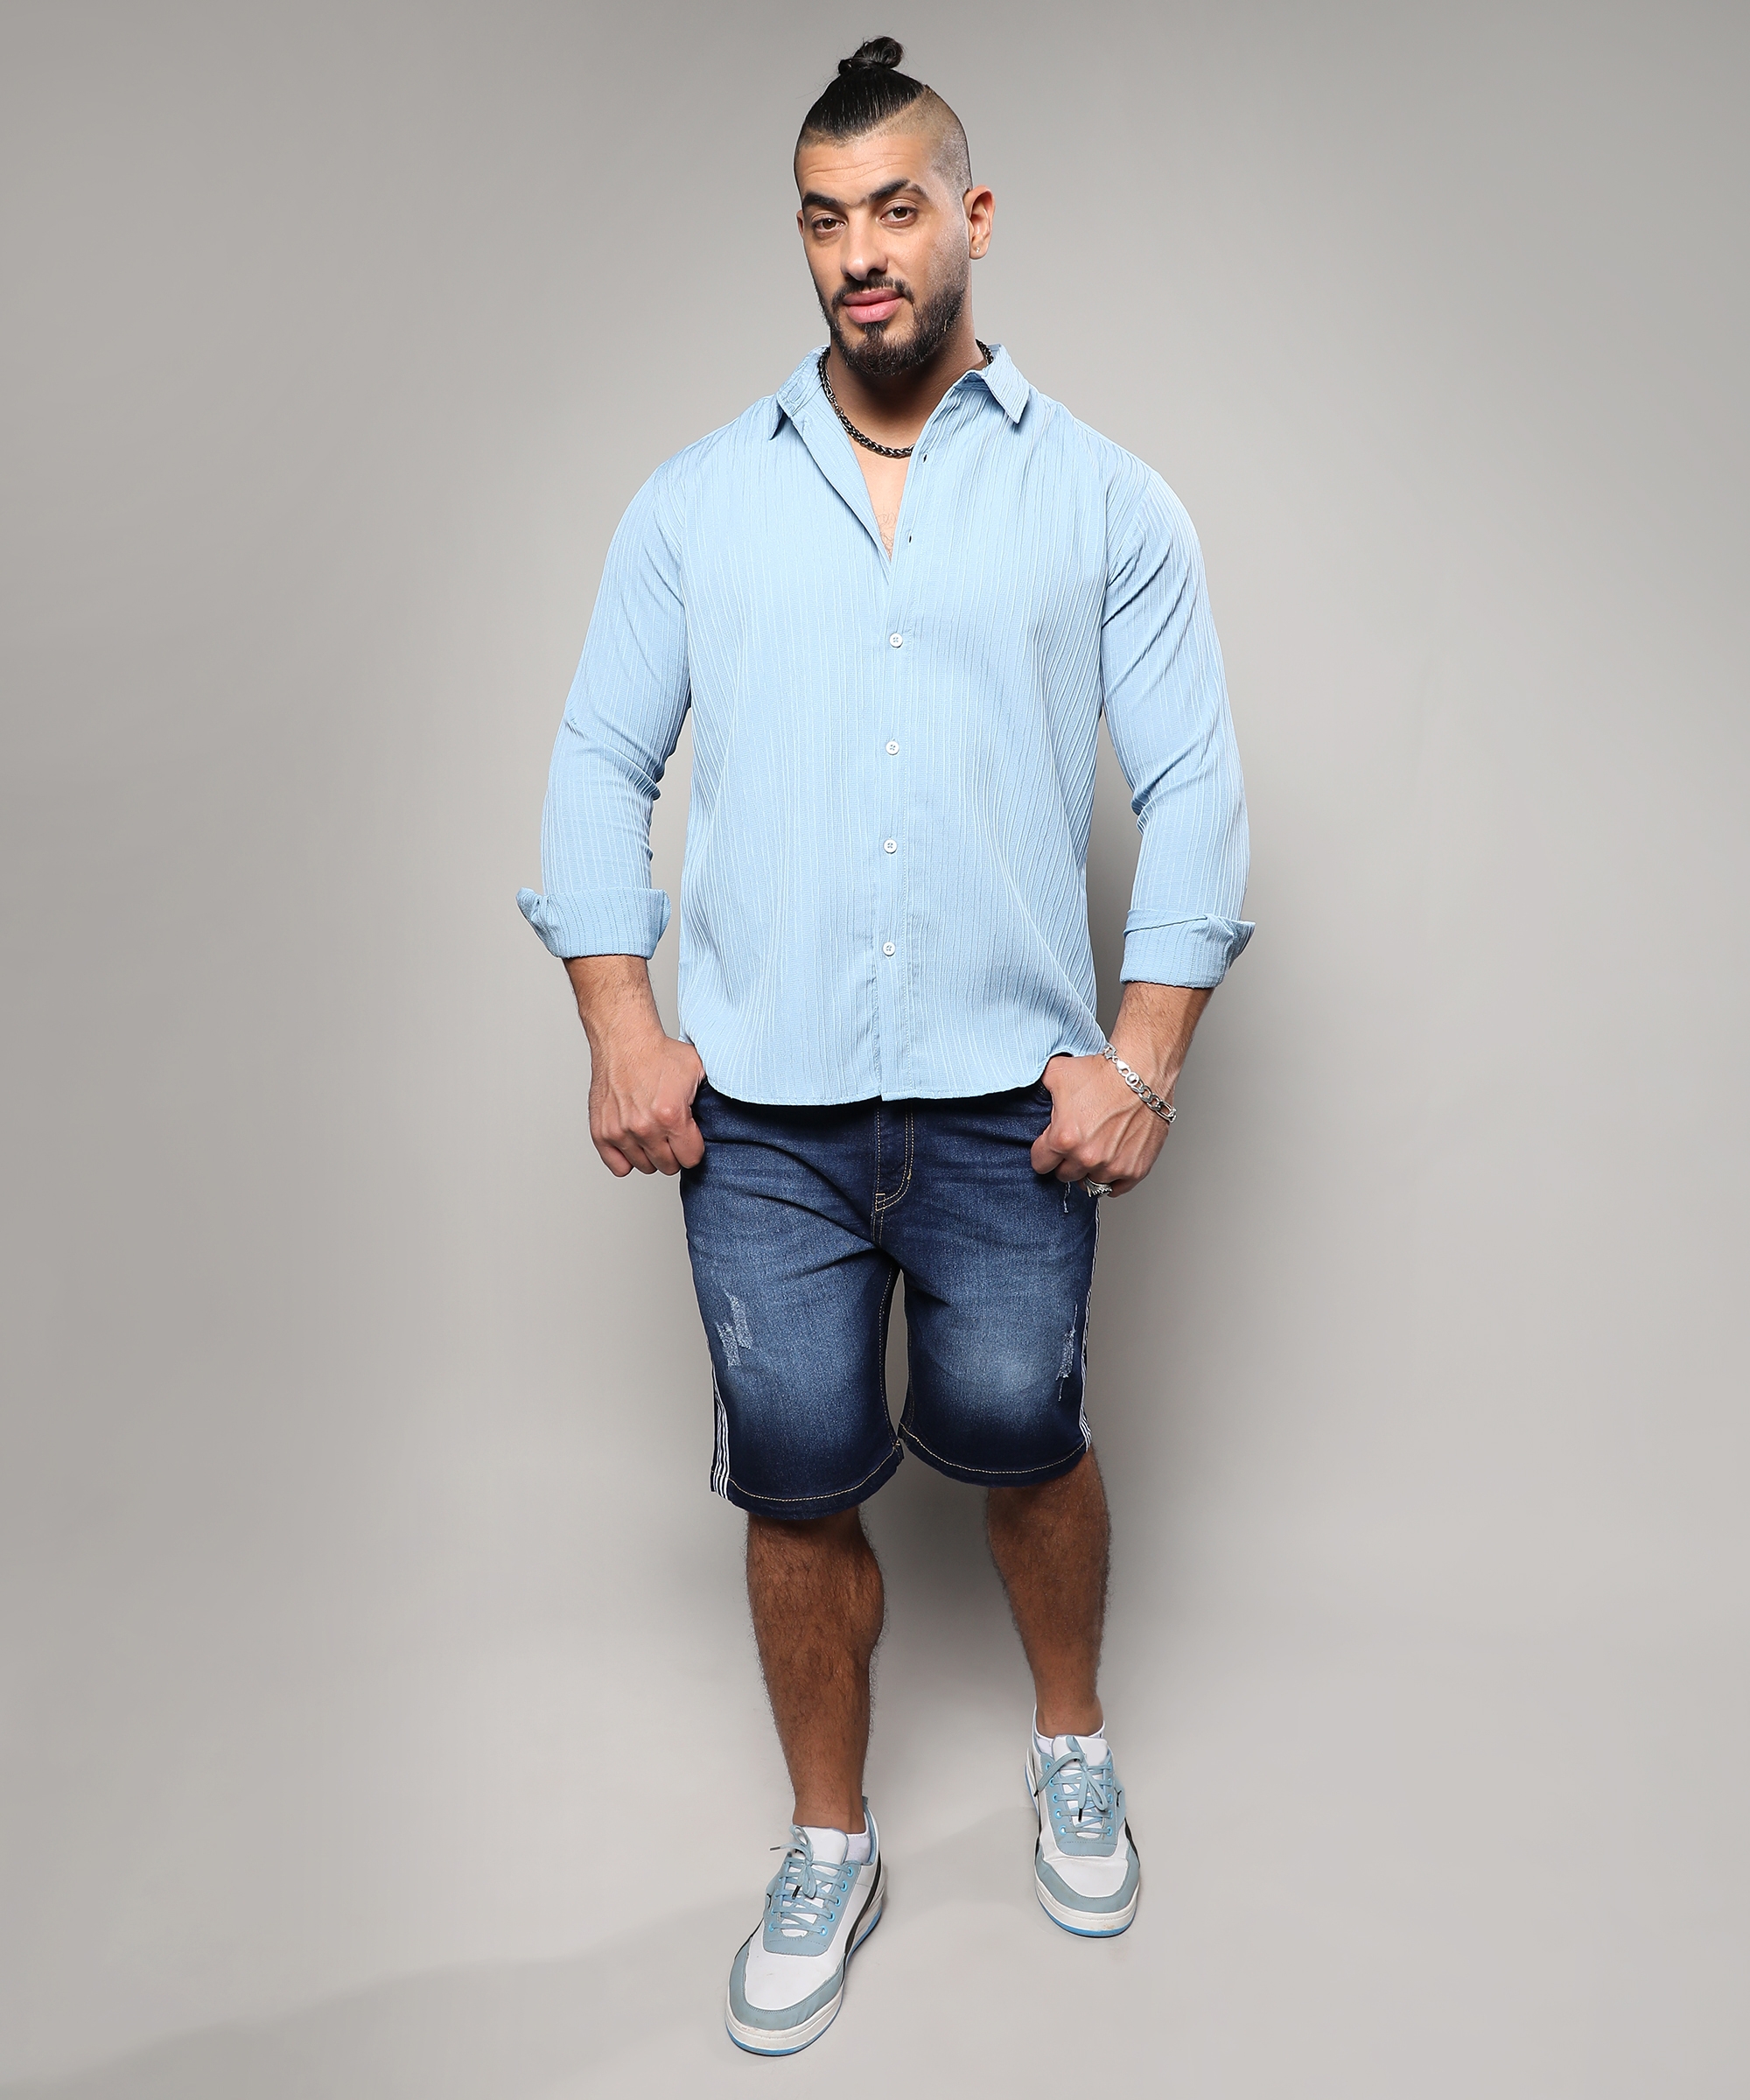 Instafab Plus | Men's Light Blue Vertically Creased Shirt